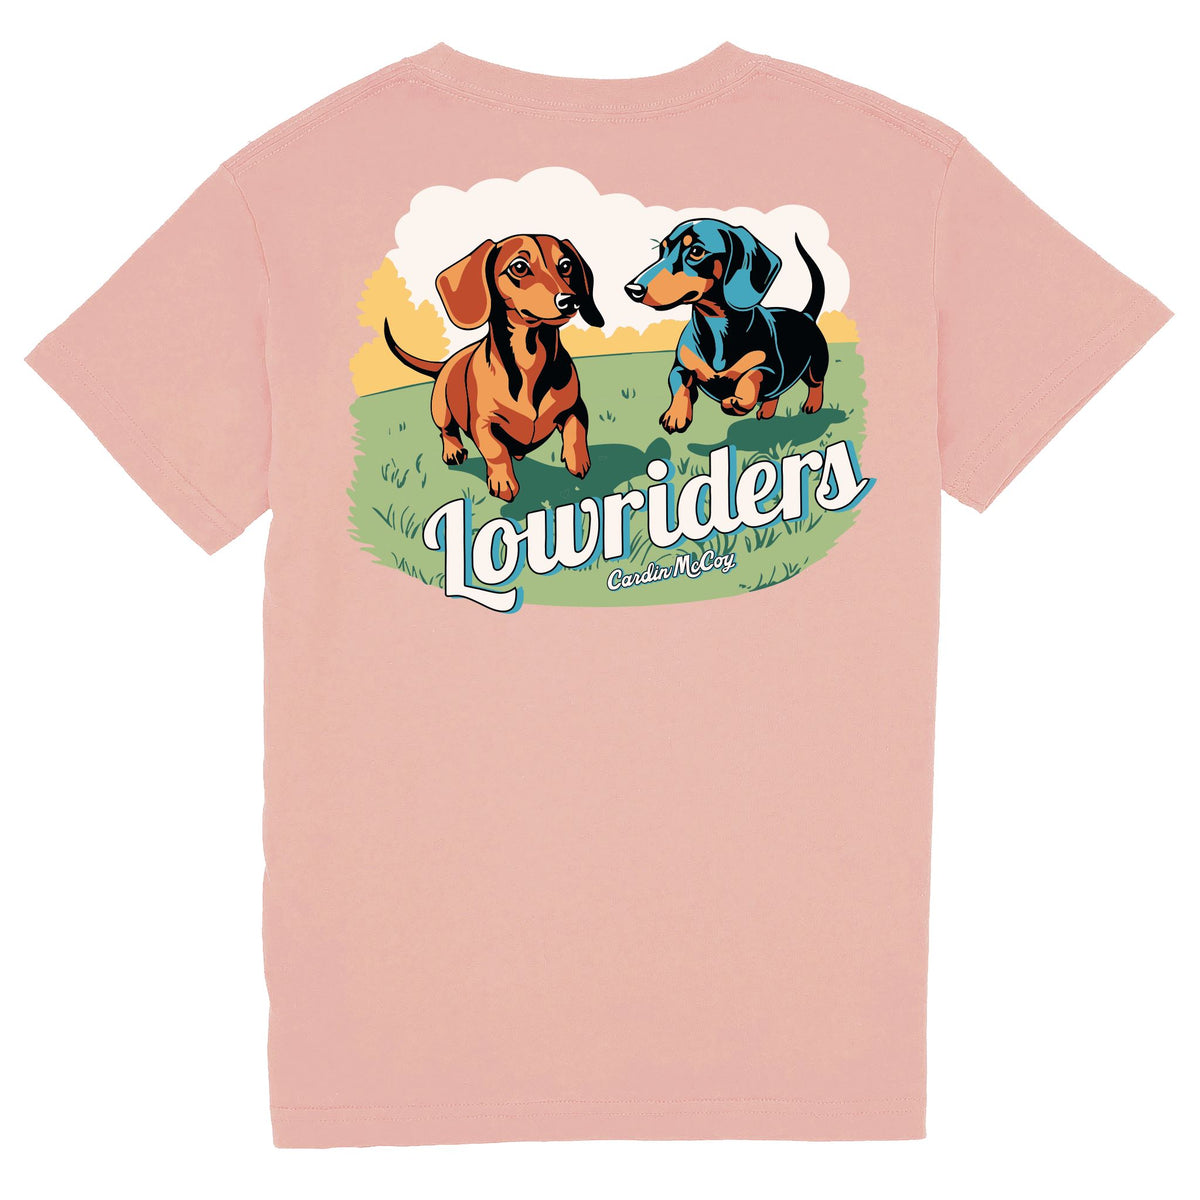 Kids' Lowriders Short Sleeve Tee Short Sleeve T-Shirt Cardin McCoy Rose Tan XS (4/5) Pocket